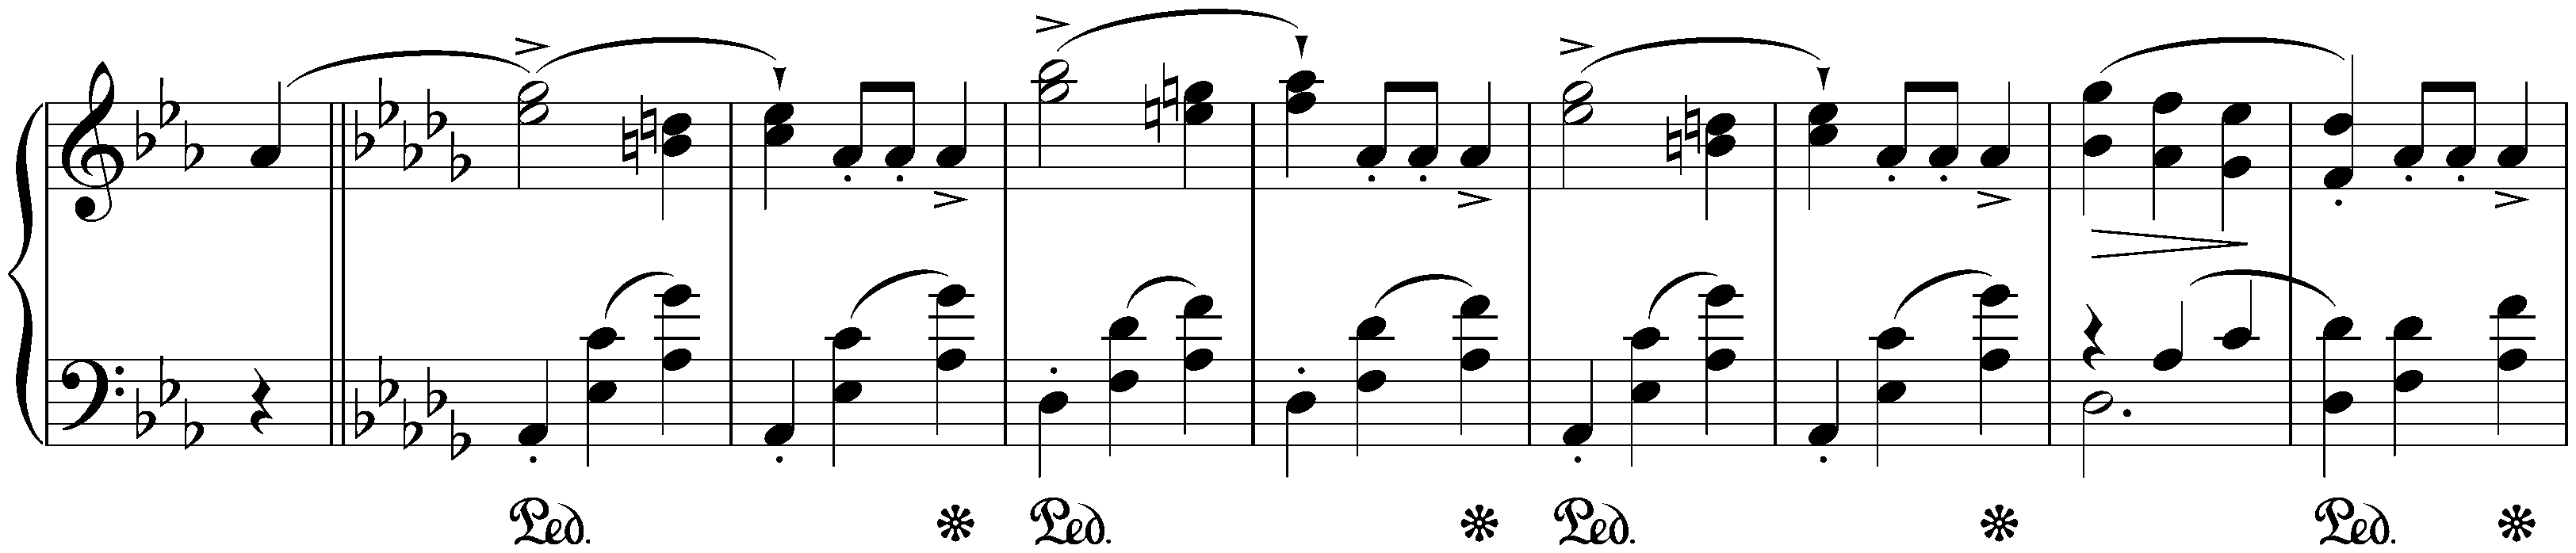 Grande Valse brillante in E-flat major, op. 18